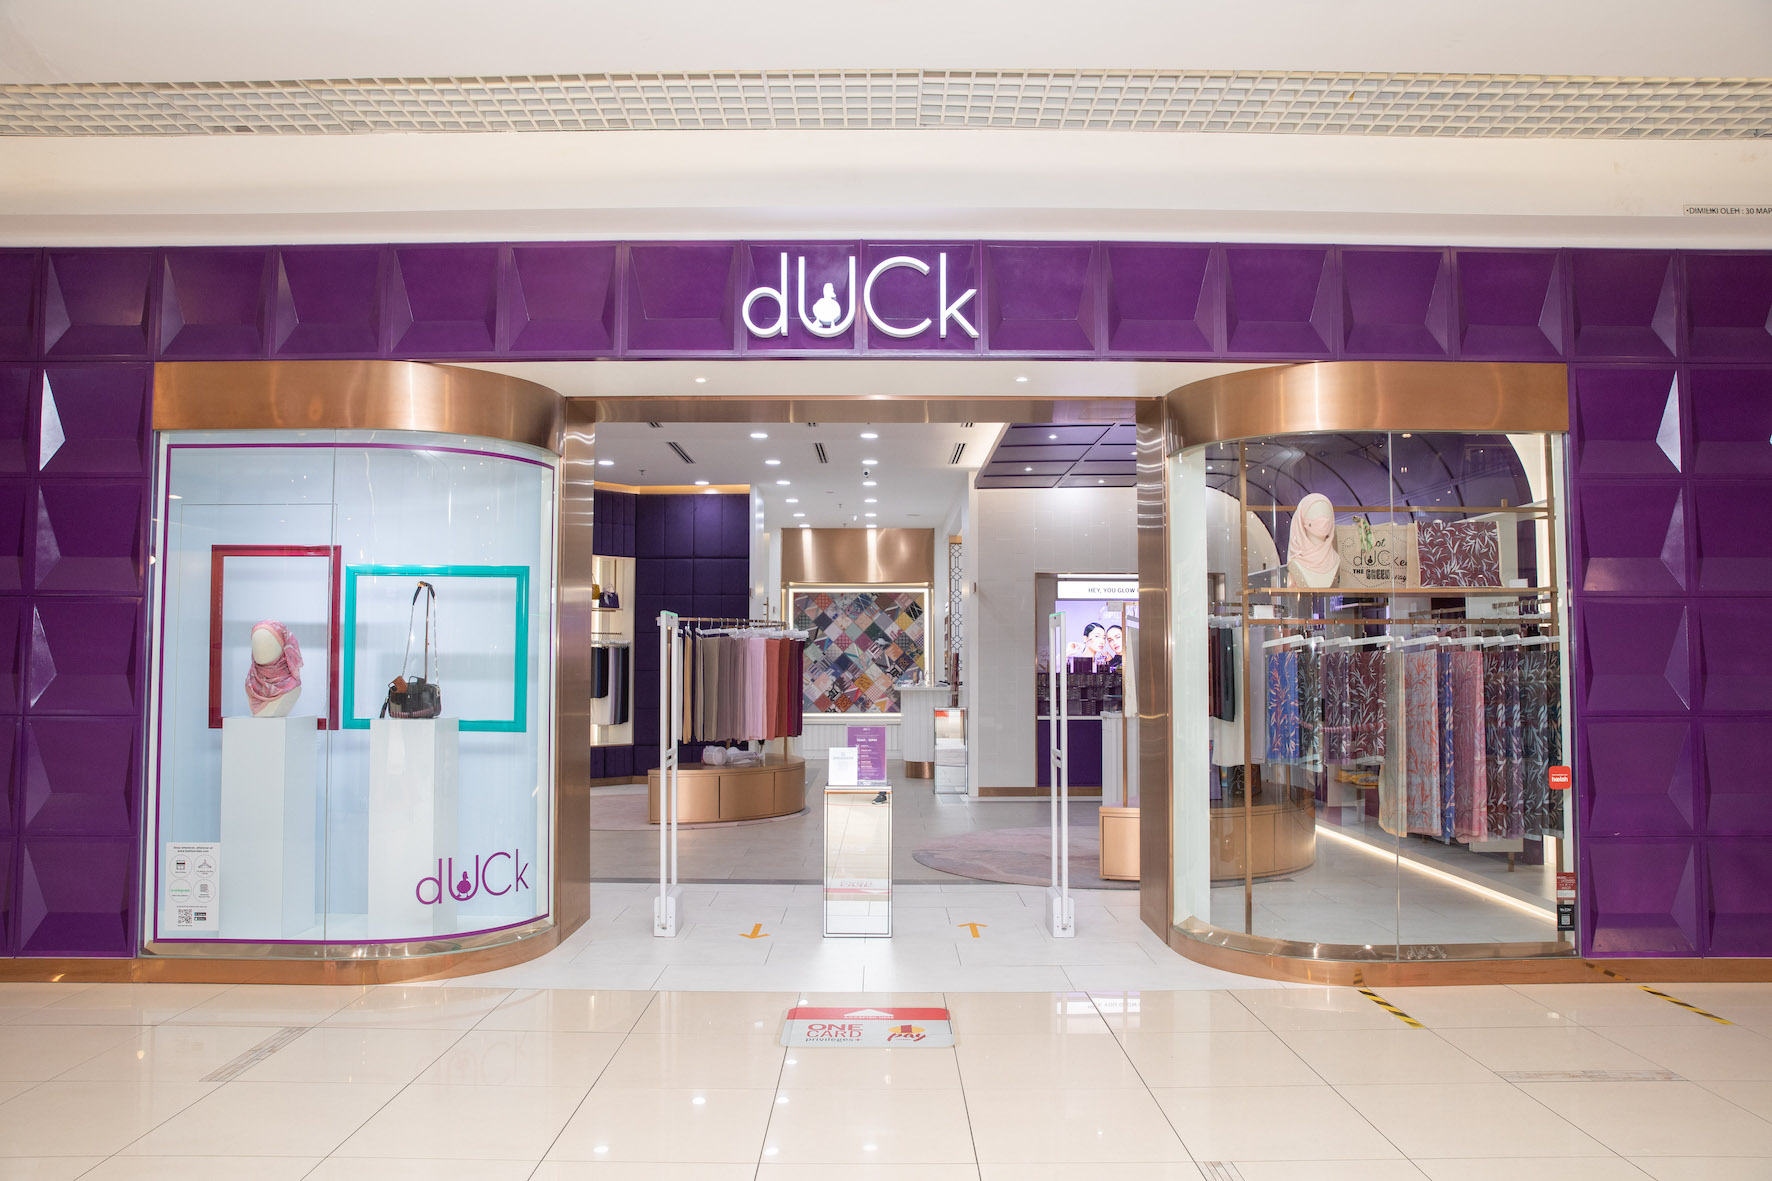 Duck kl east mall